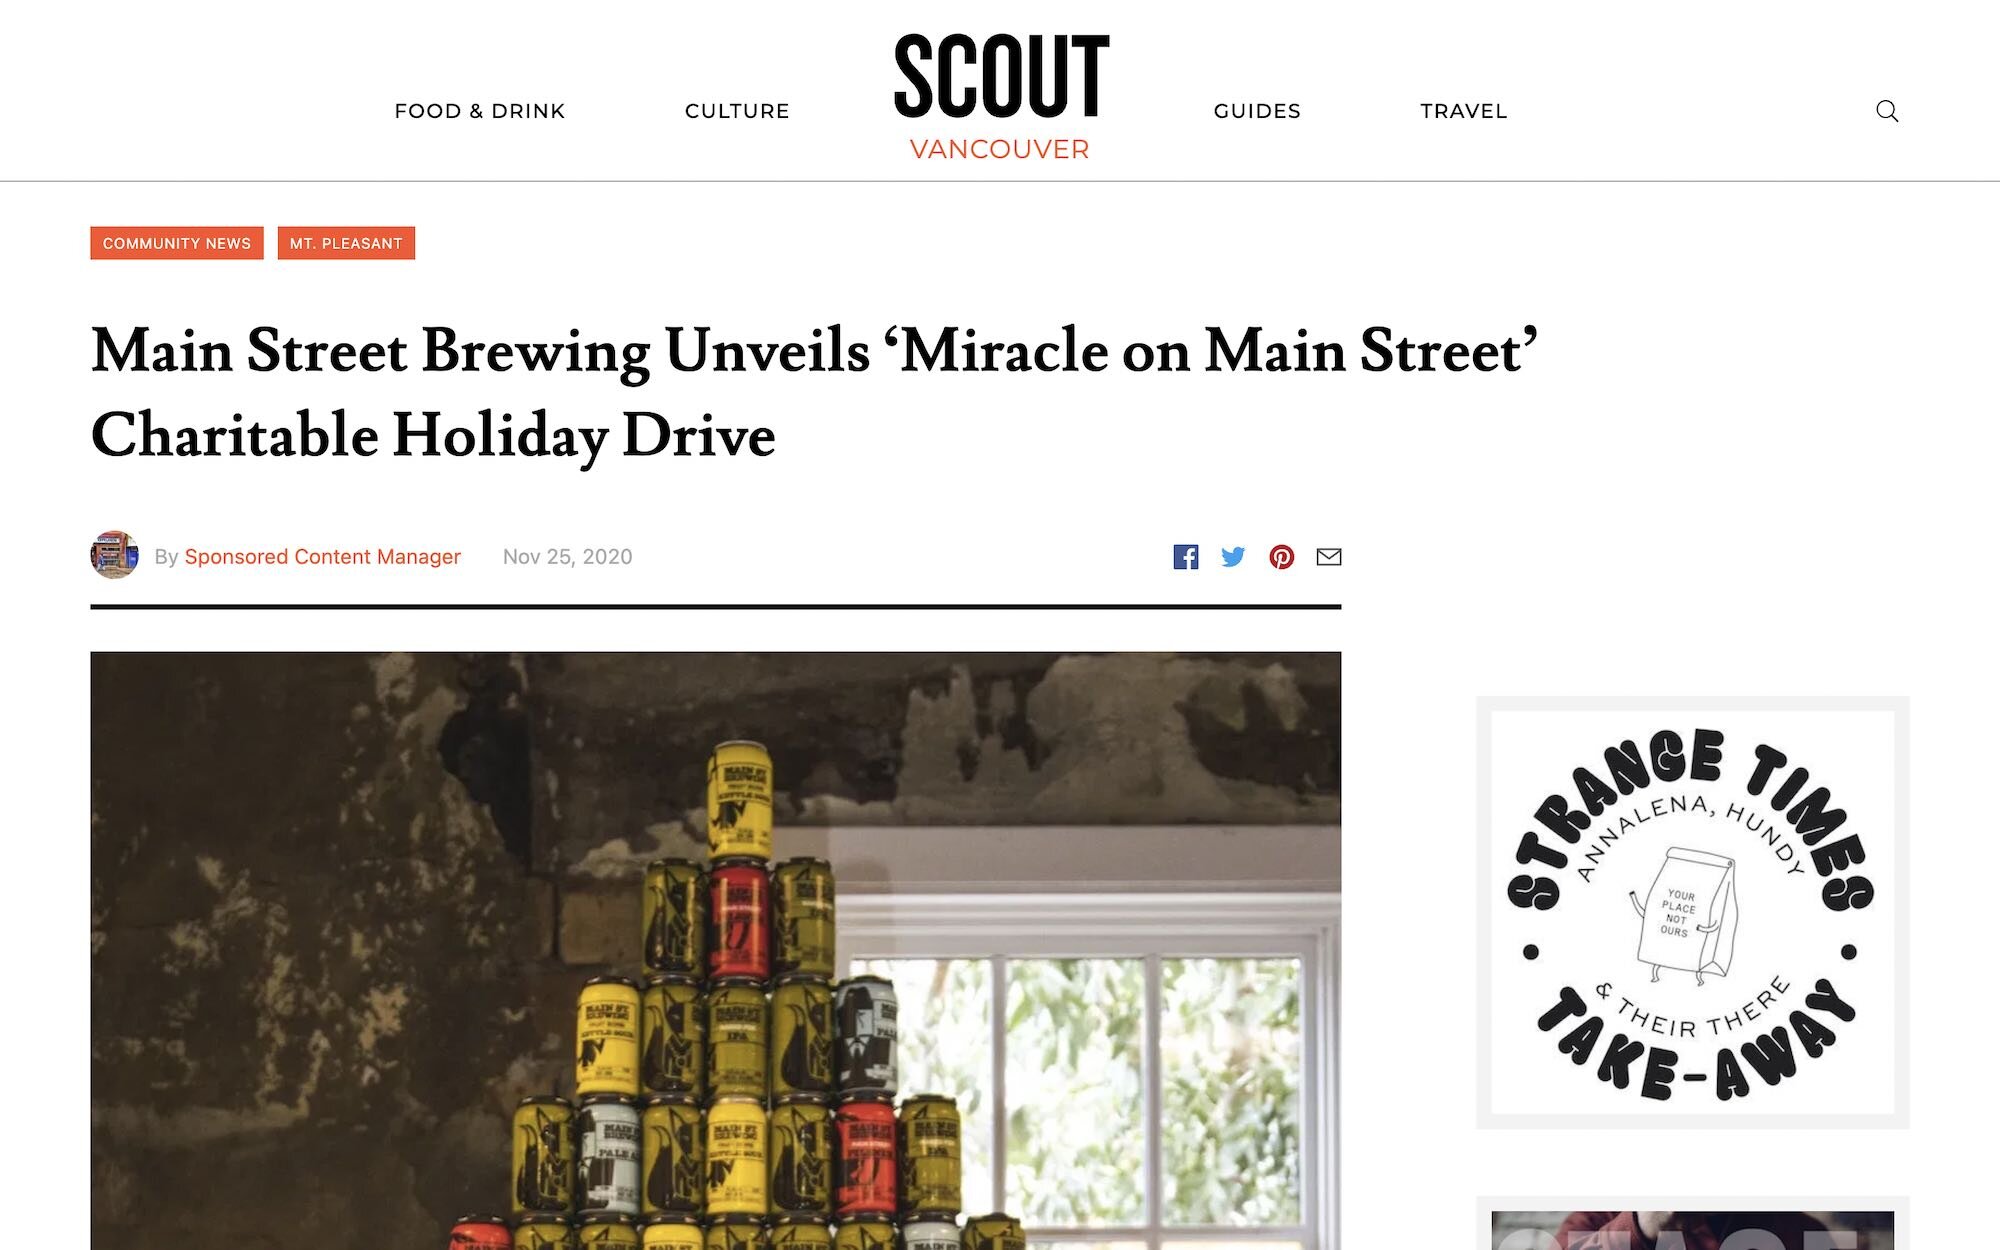 Main Street Brewing Miracle on Main Street Scout Magazine.jpeg